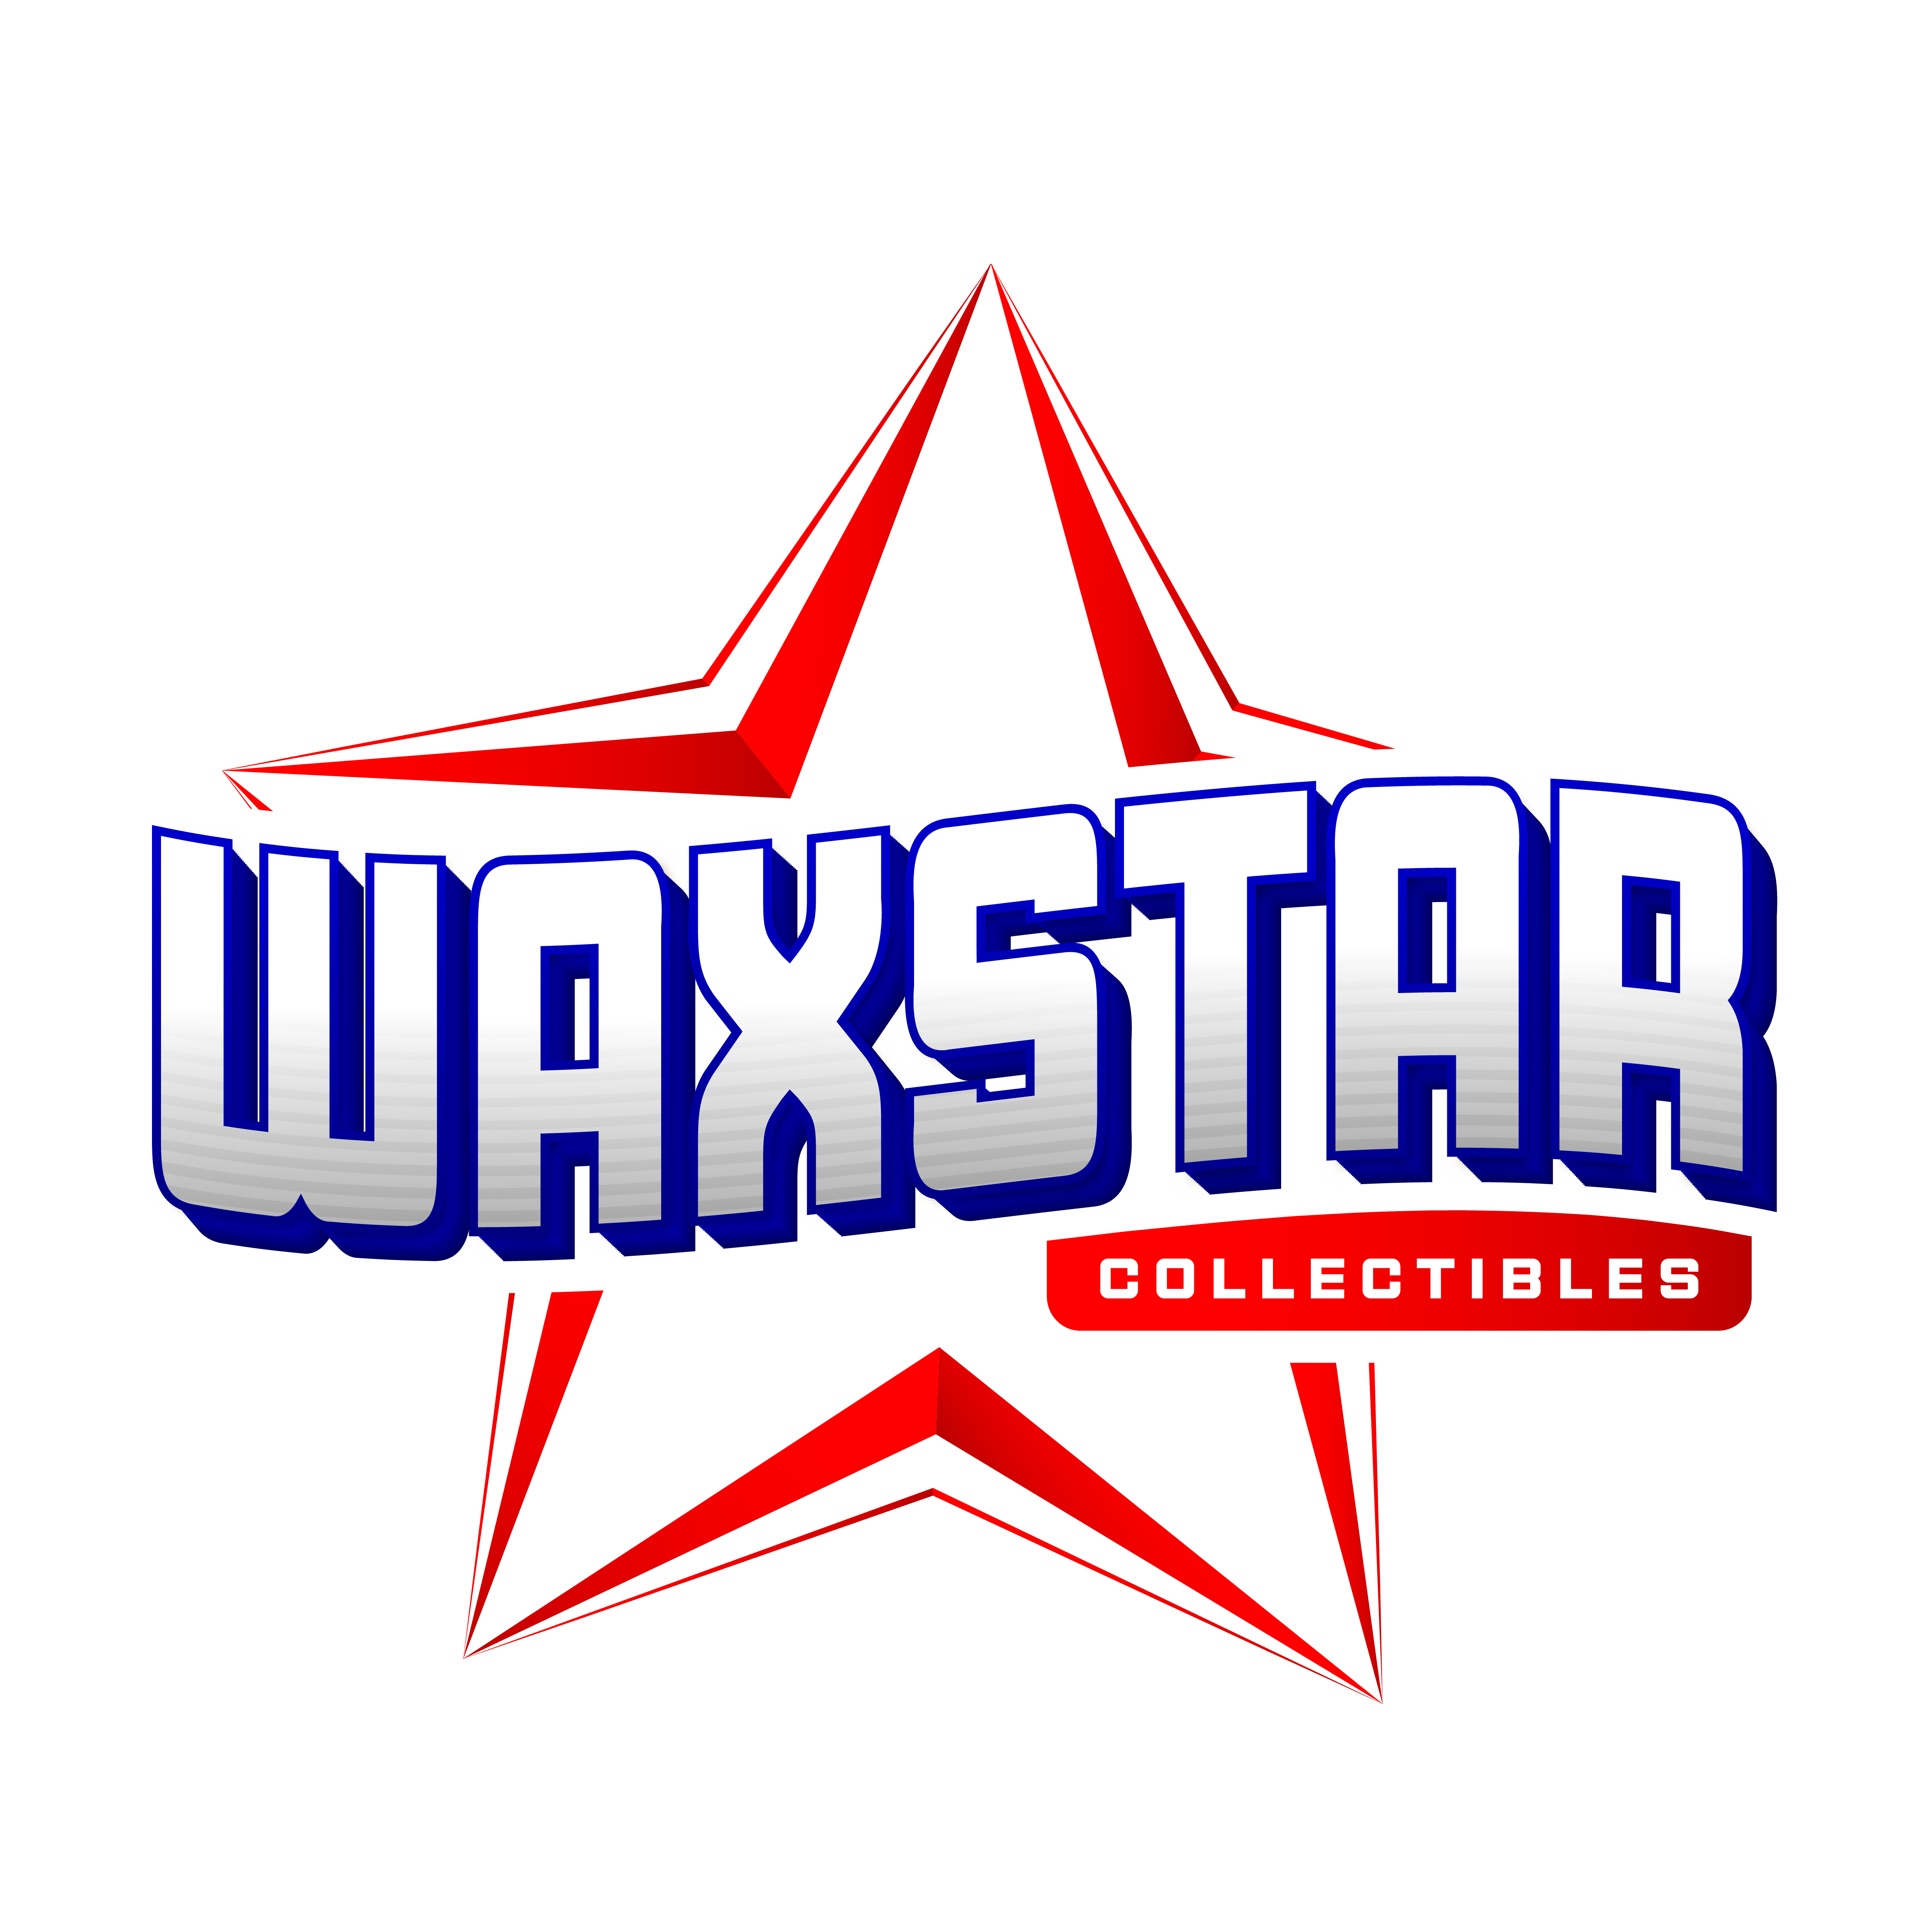 Waxstar Collectibles